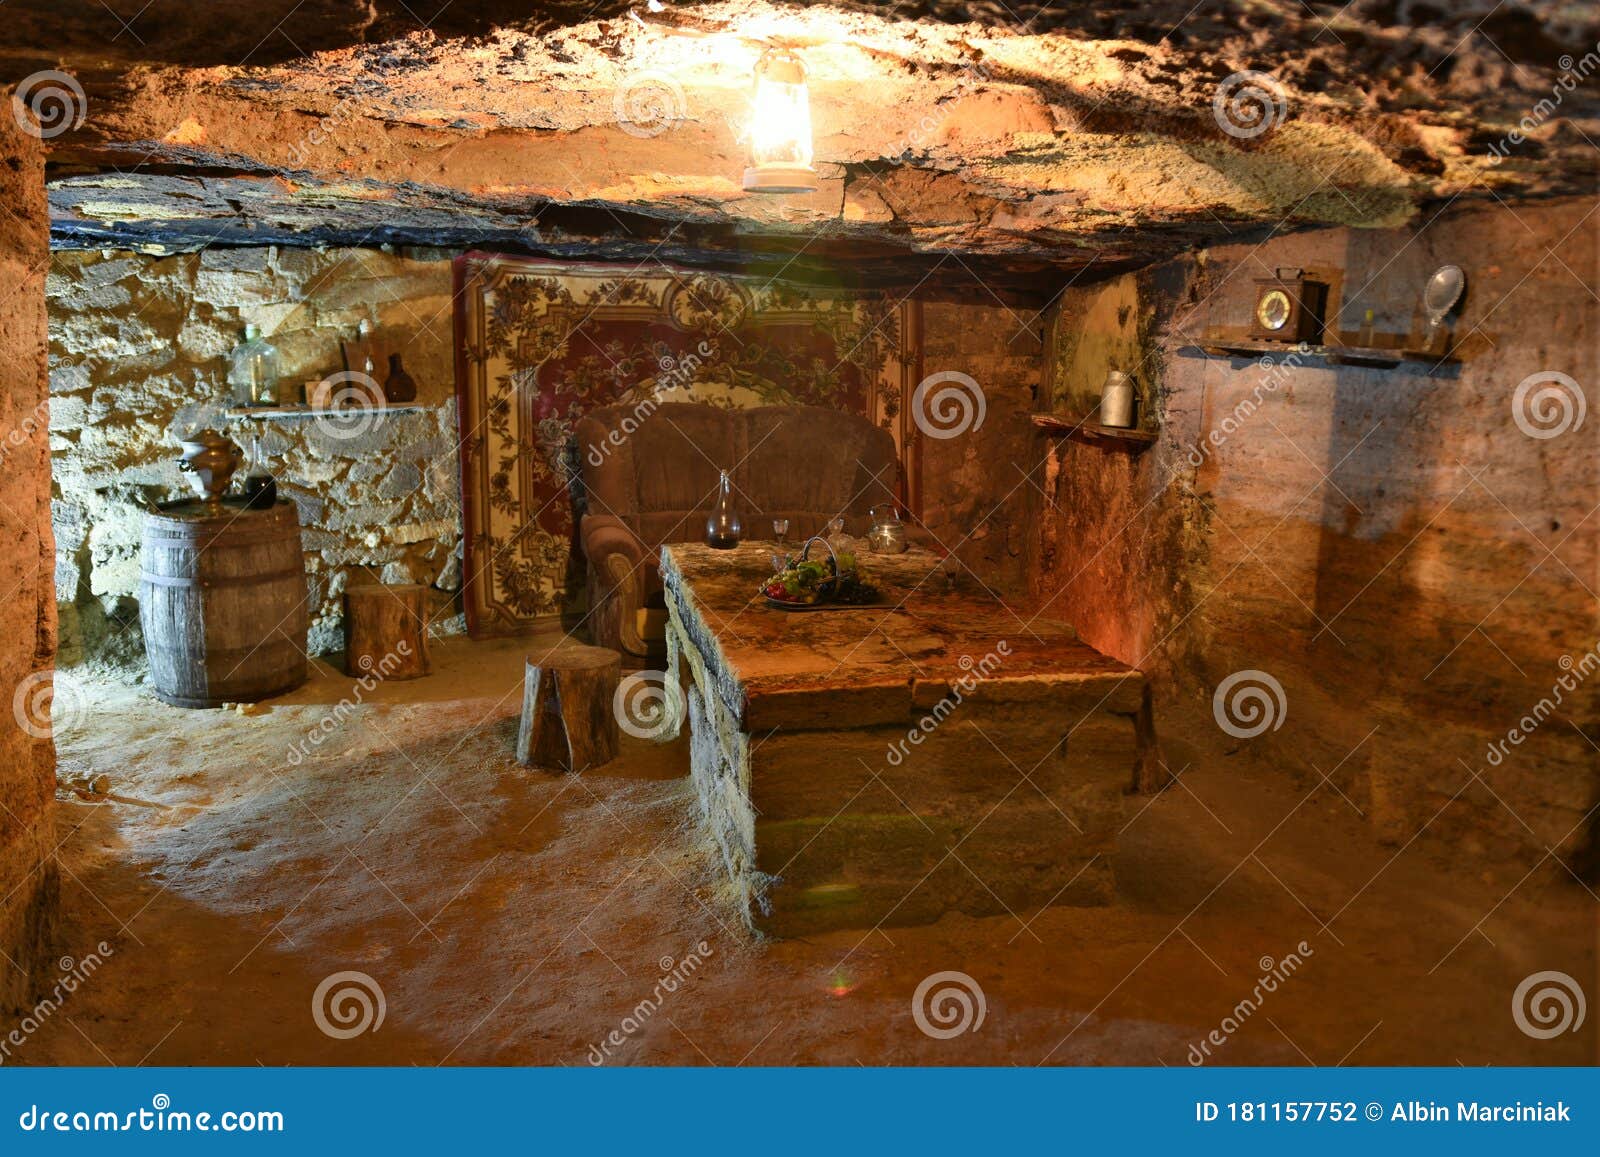 catacombs of the underground near odessa in ukraine